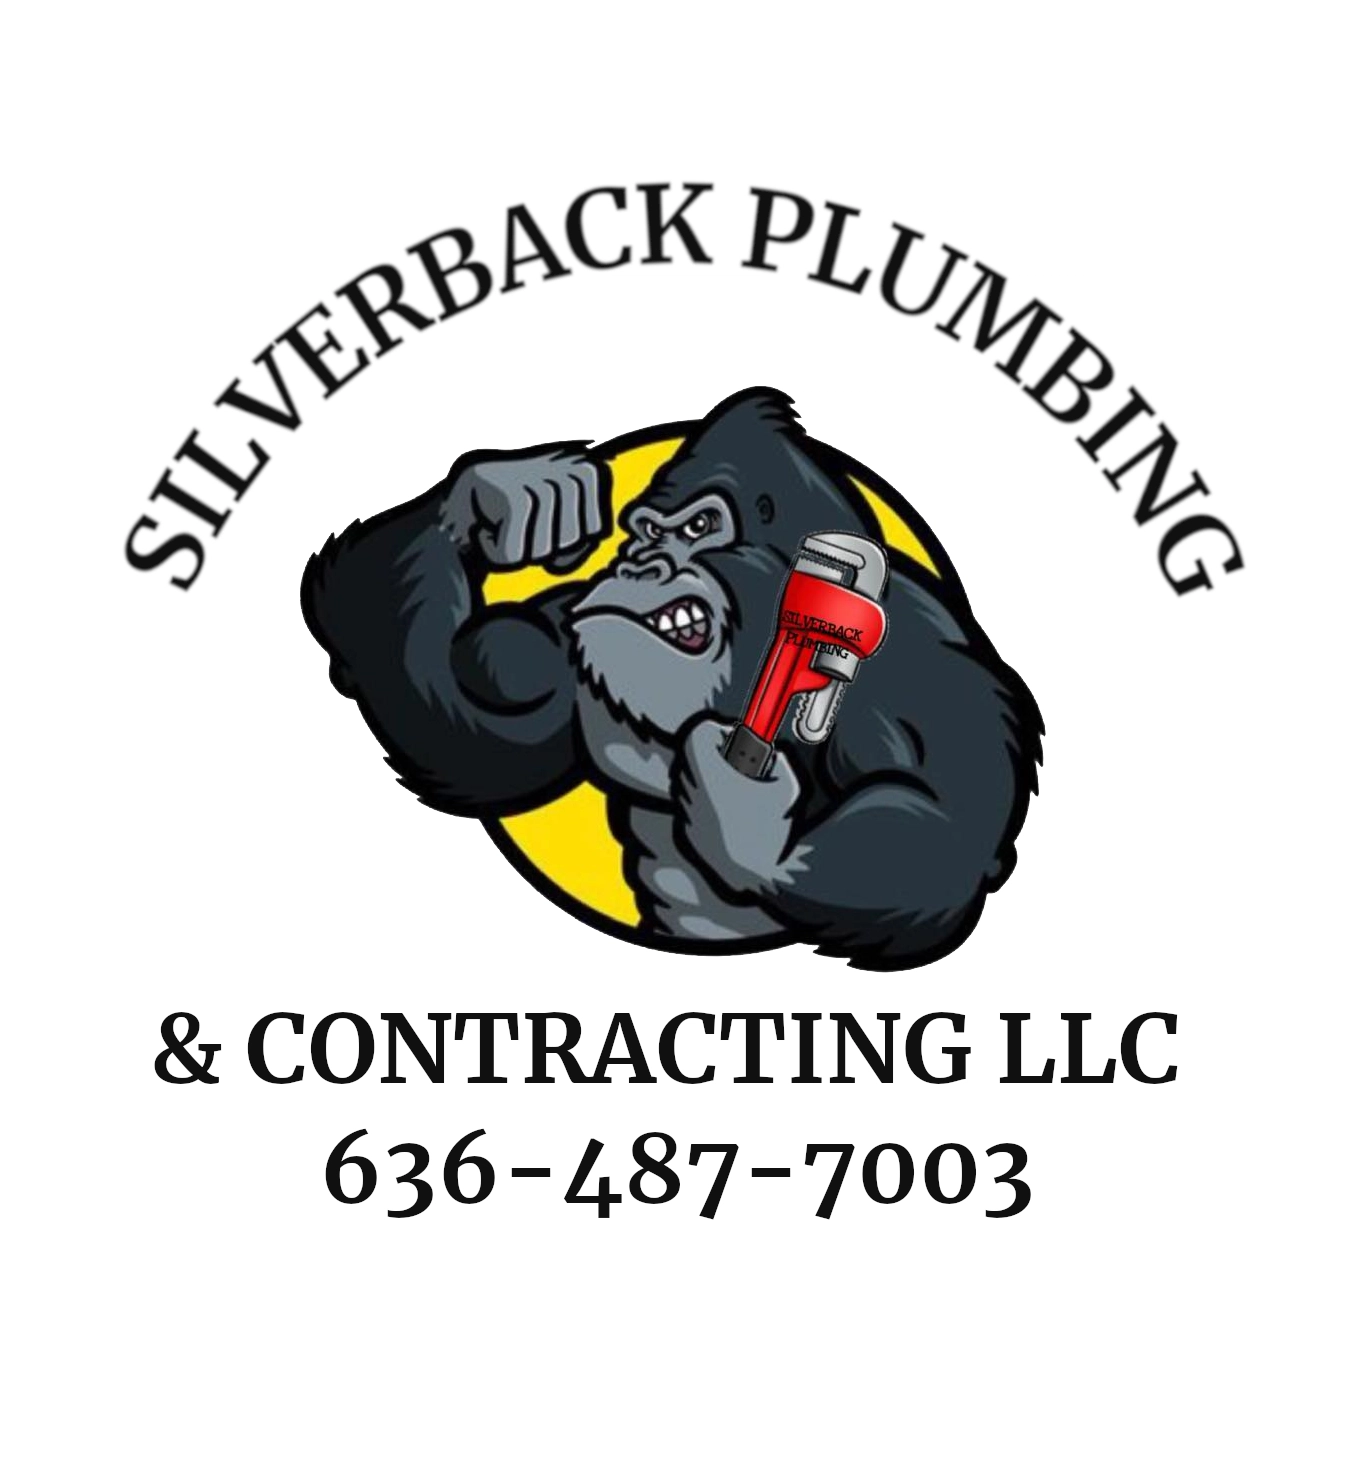 Silverback Plumbing & Contracting LLC Logo